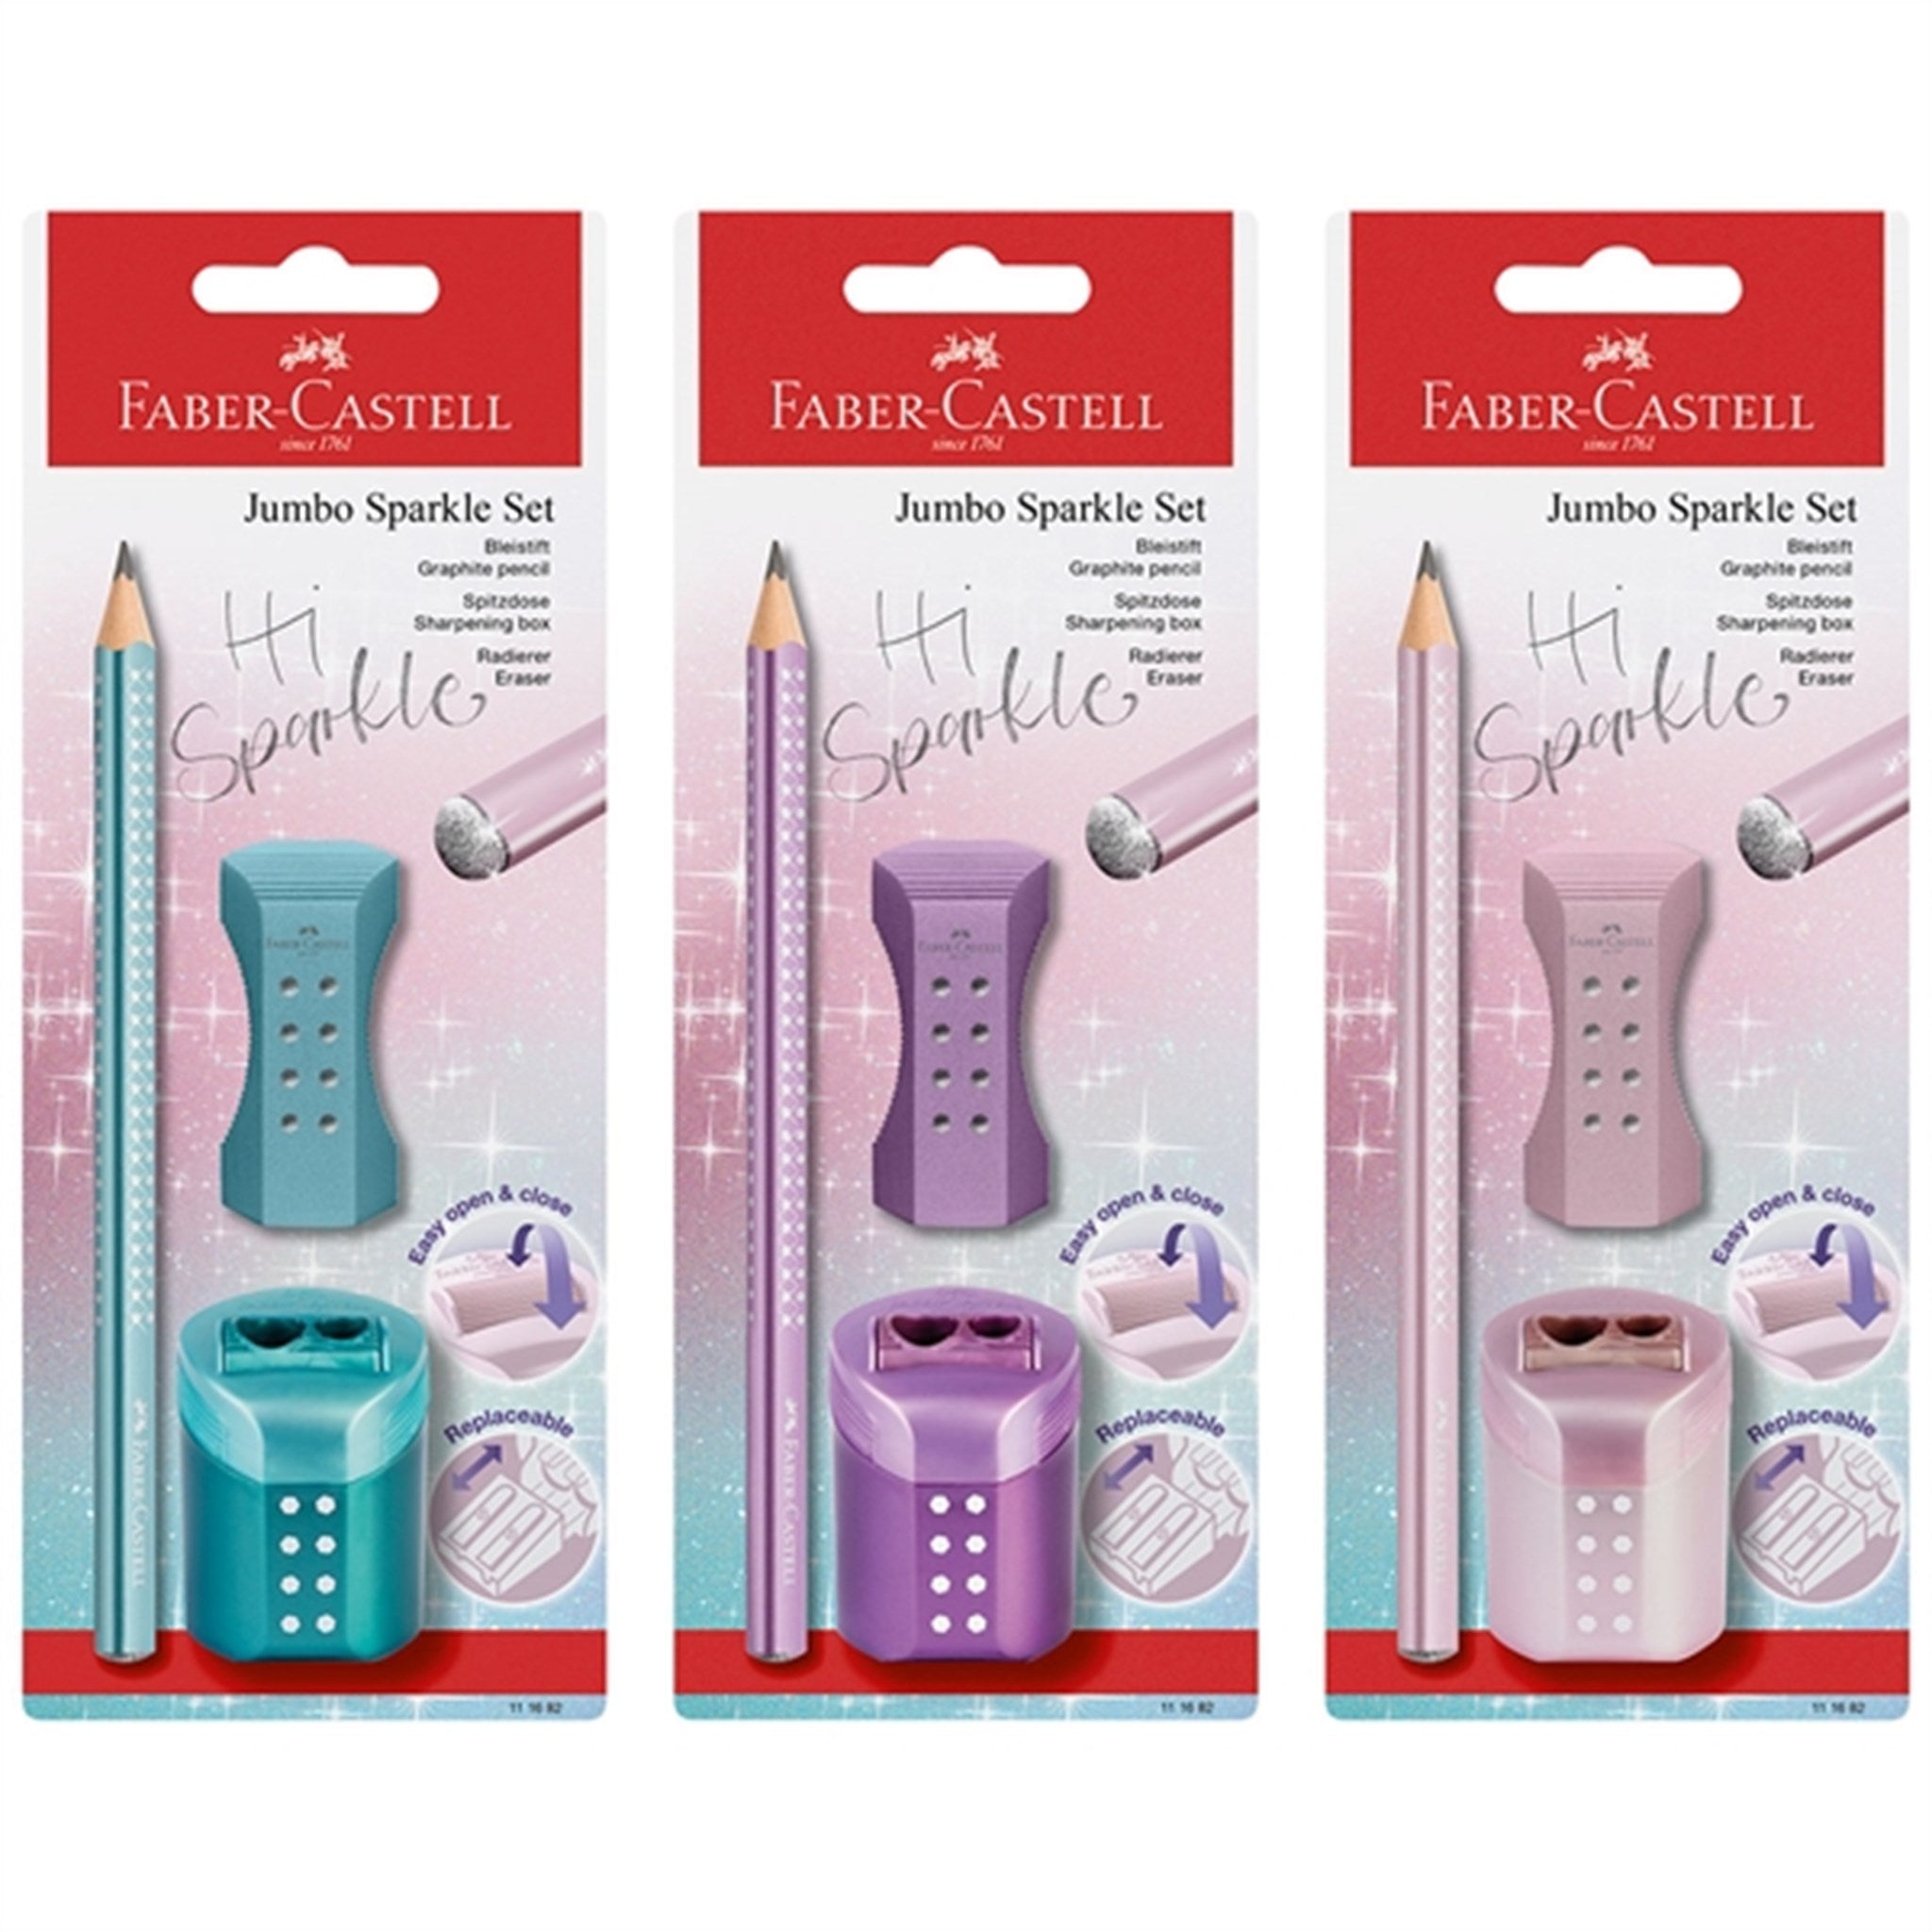 Faber-Castell Sparkle Jumbo Pencil, Eraser, Pencil Sharpener - Turquoise 2